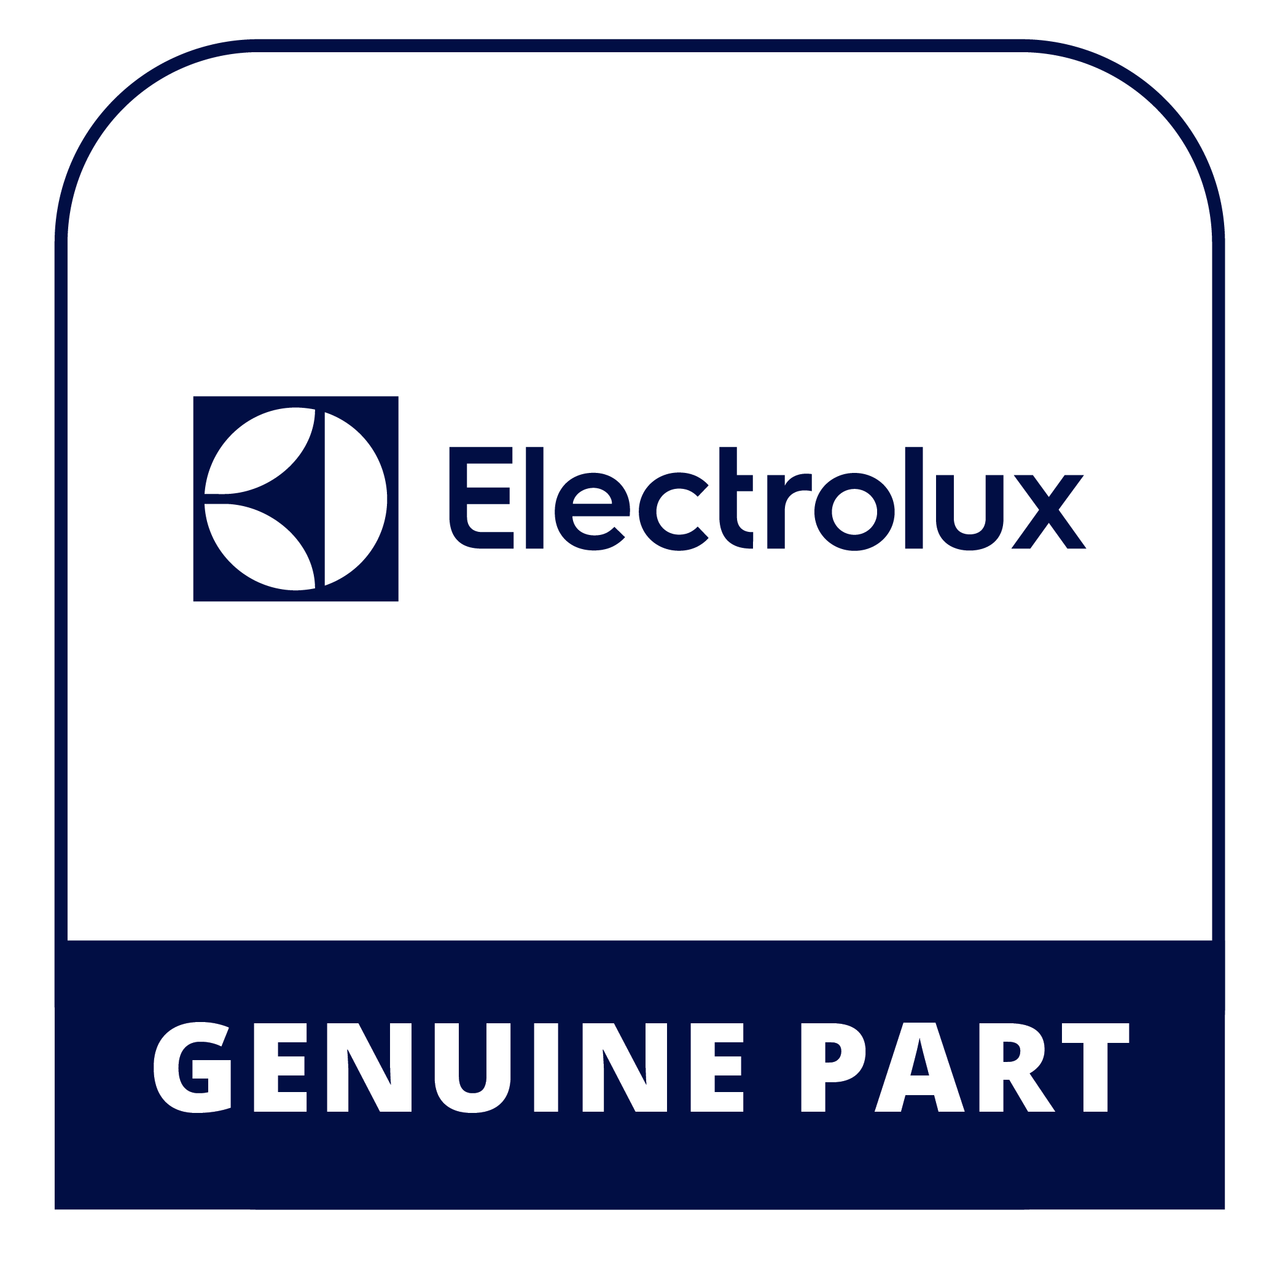 Frigidaire - Electrolux 5304500598 Trim - Genuine Electrolux Part